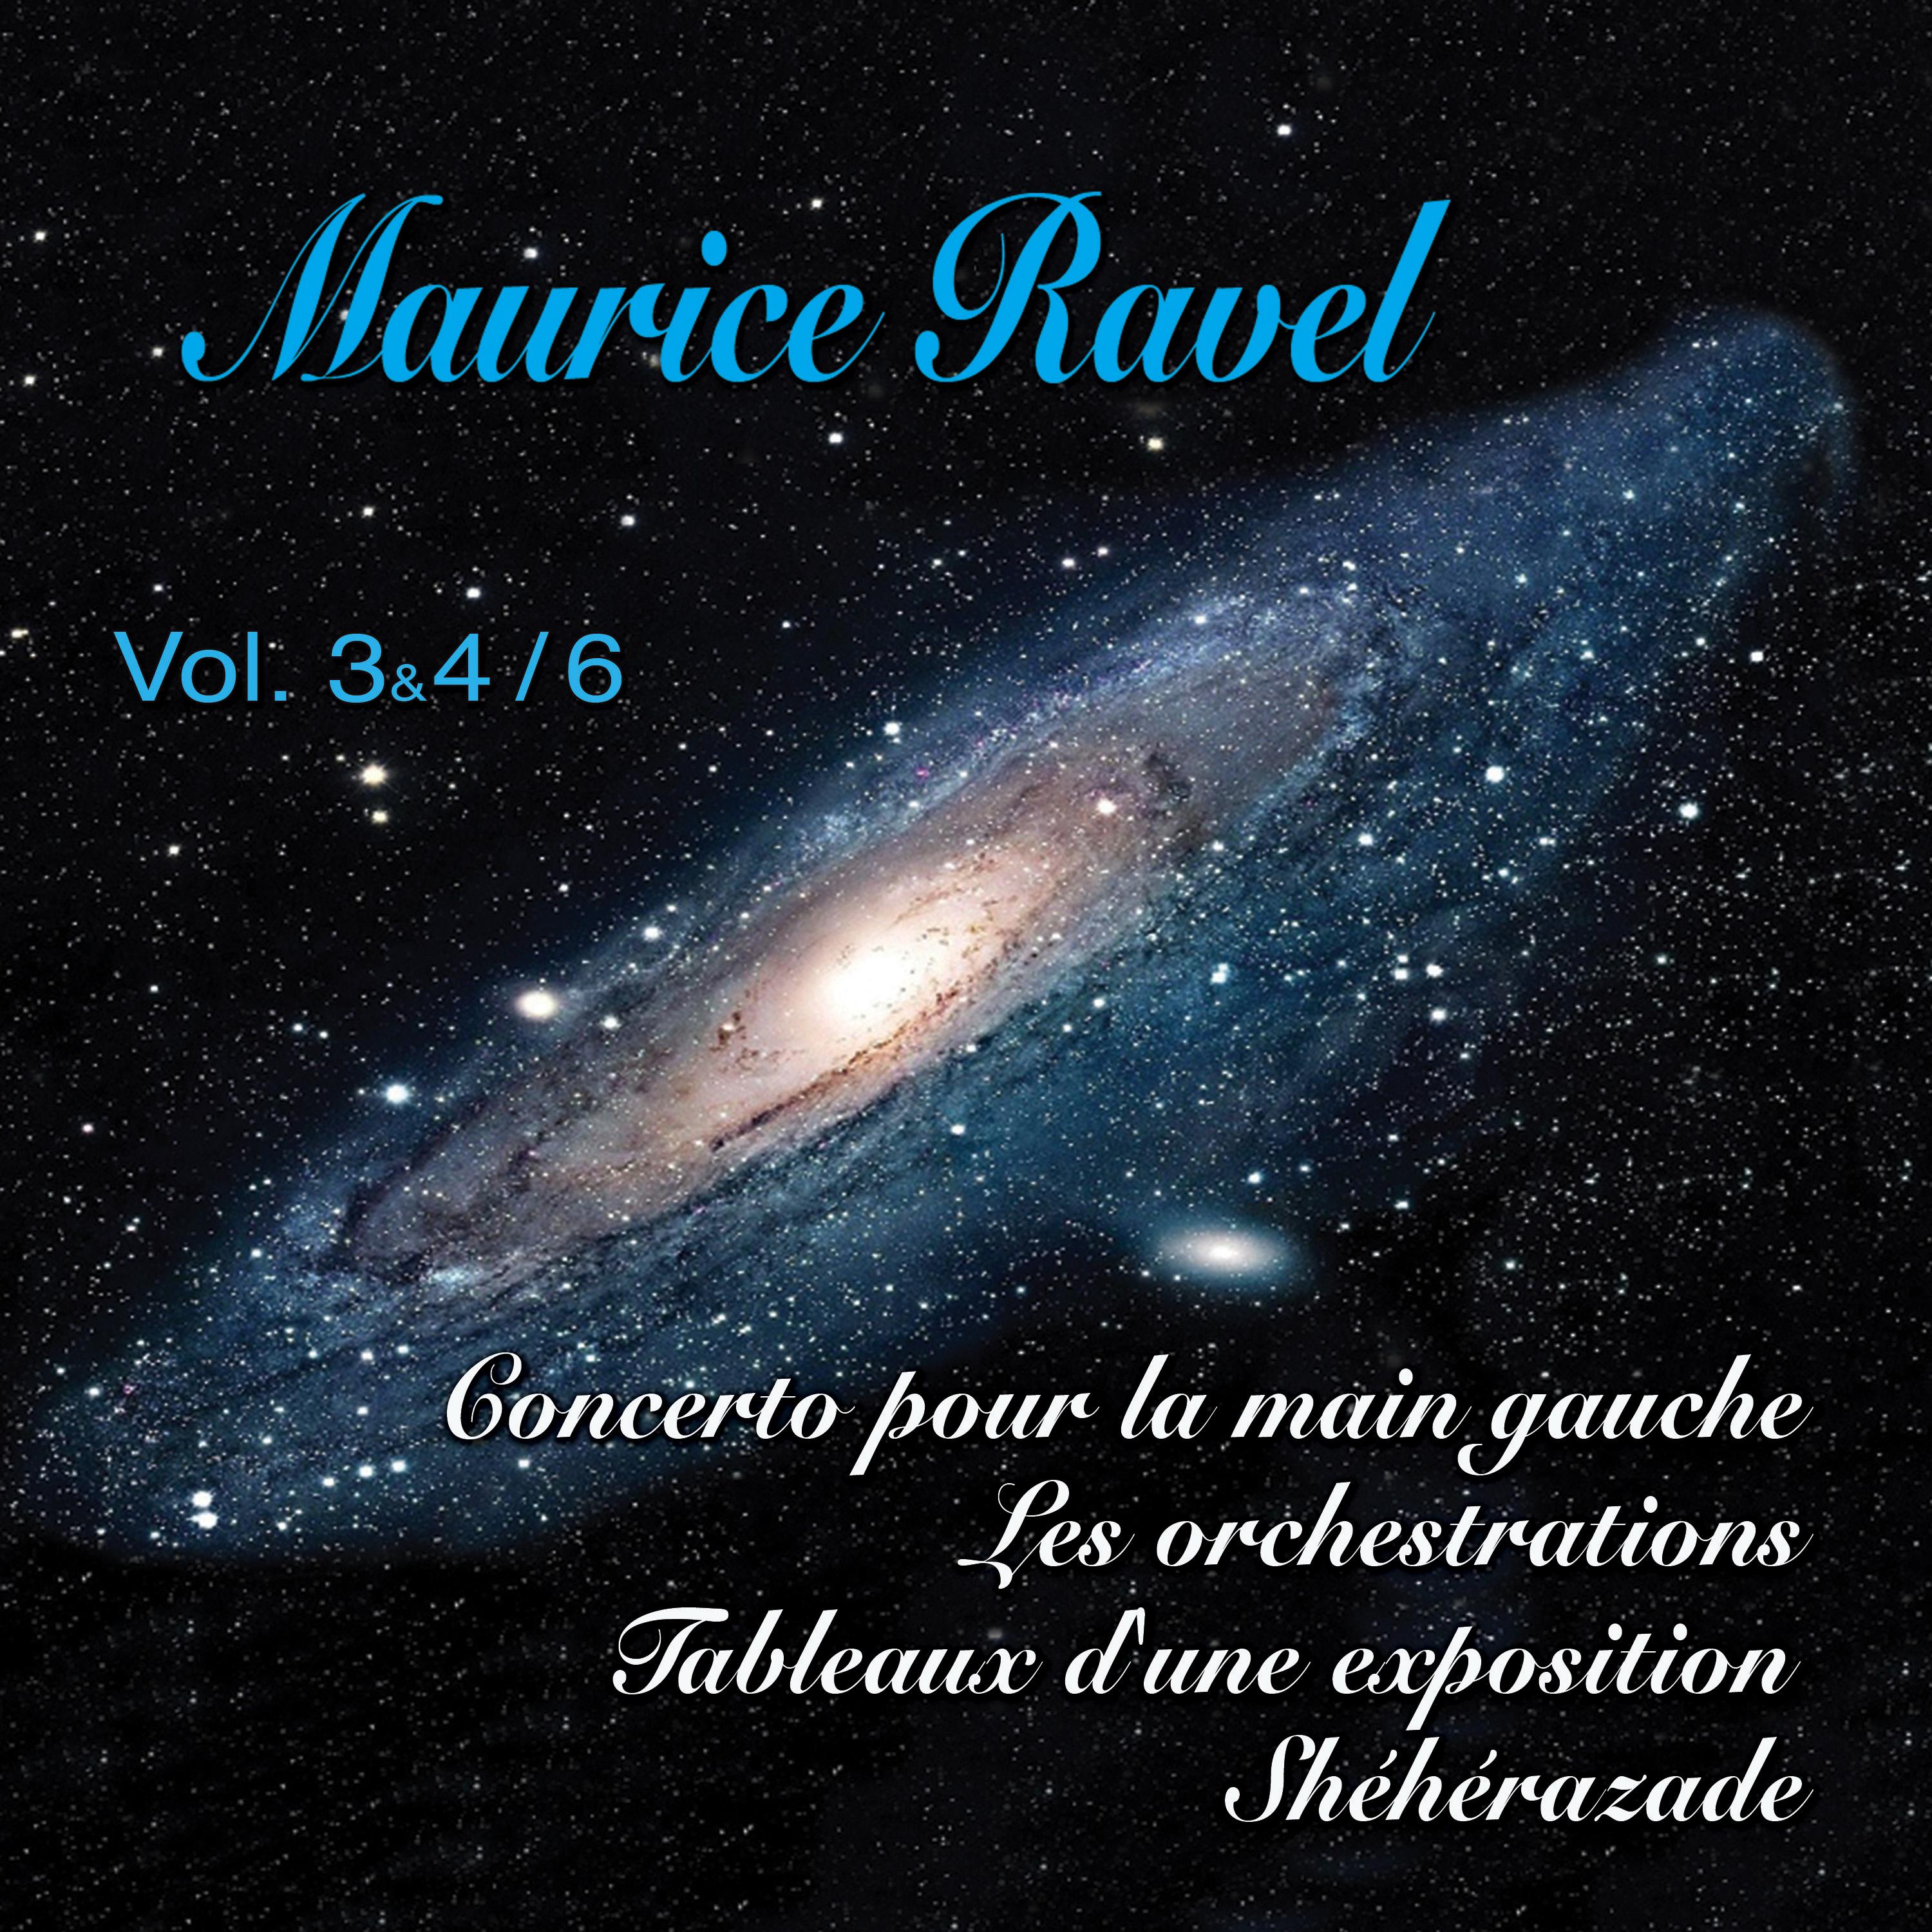 Maurice Ravel Vol. 3 & 4 / 6